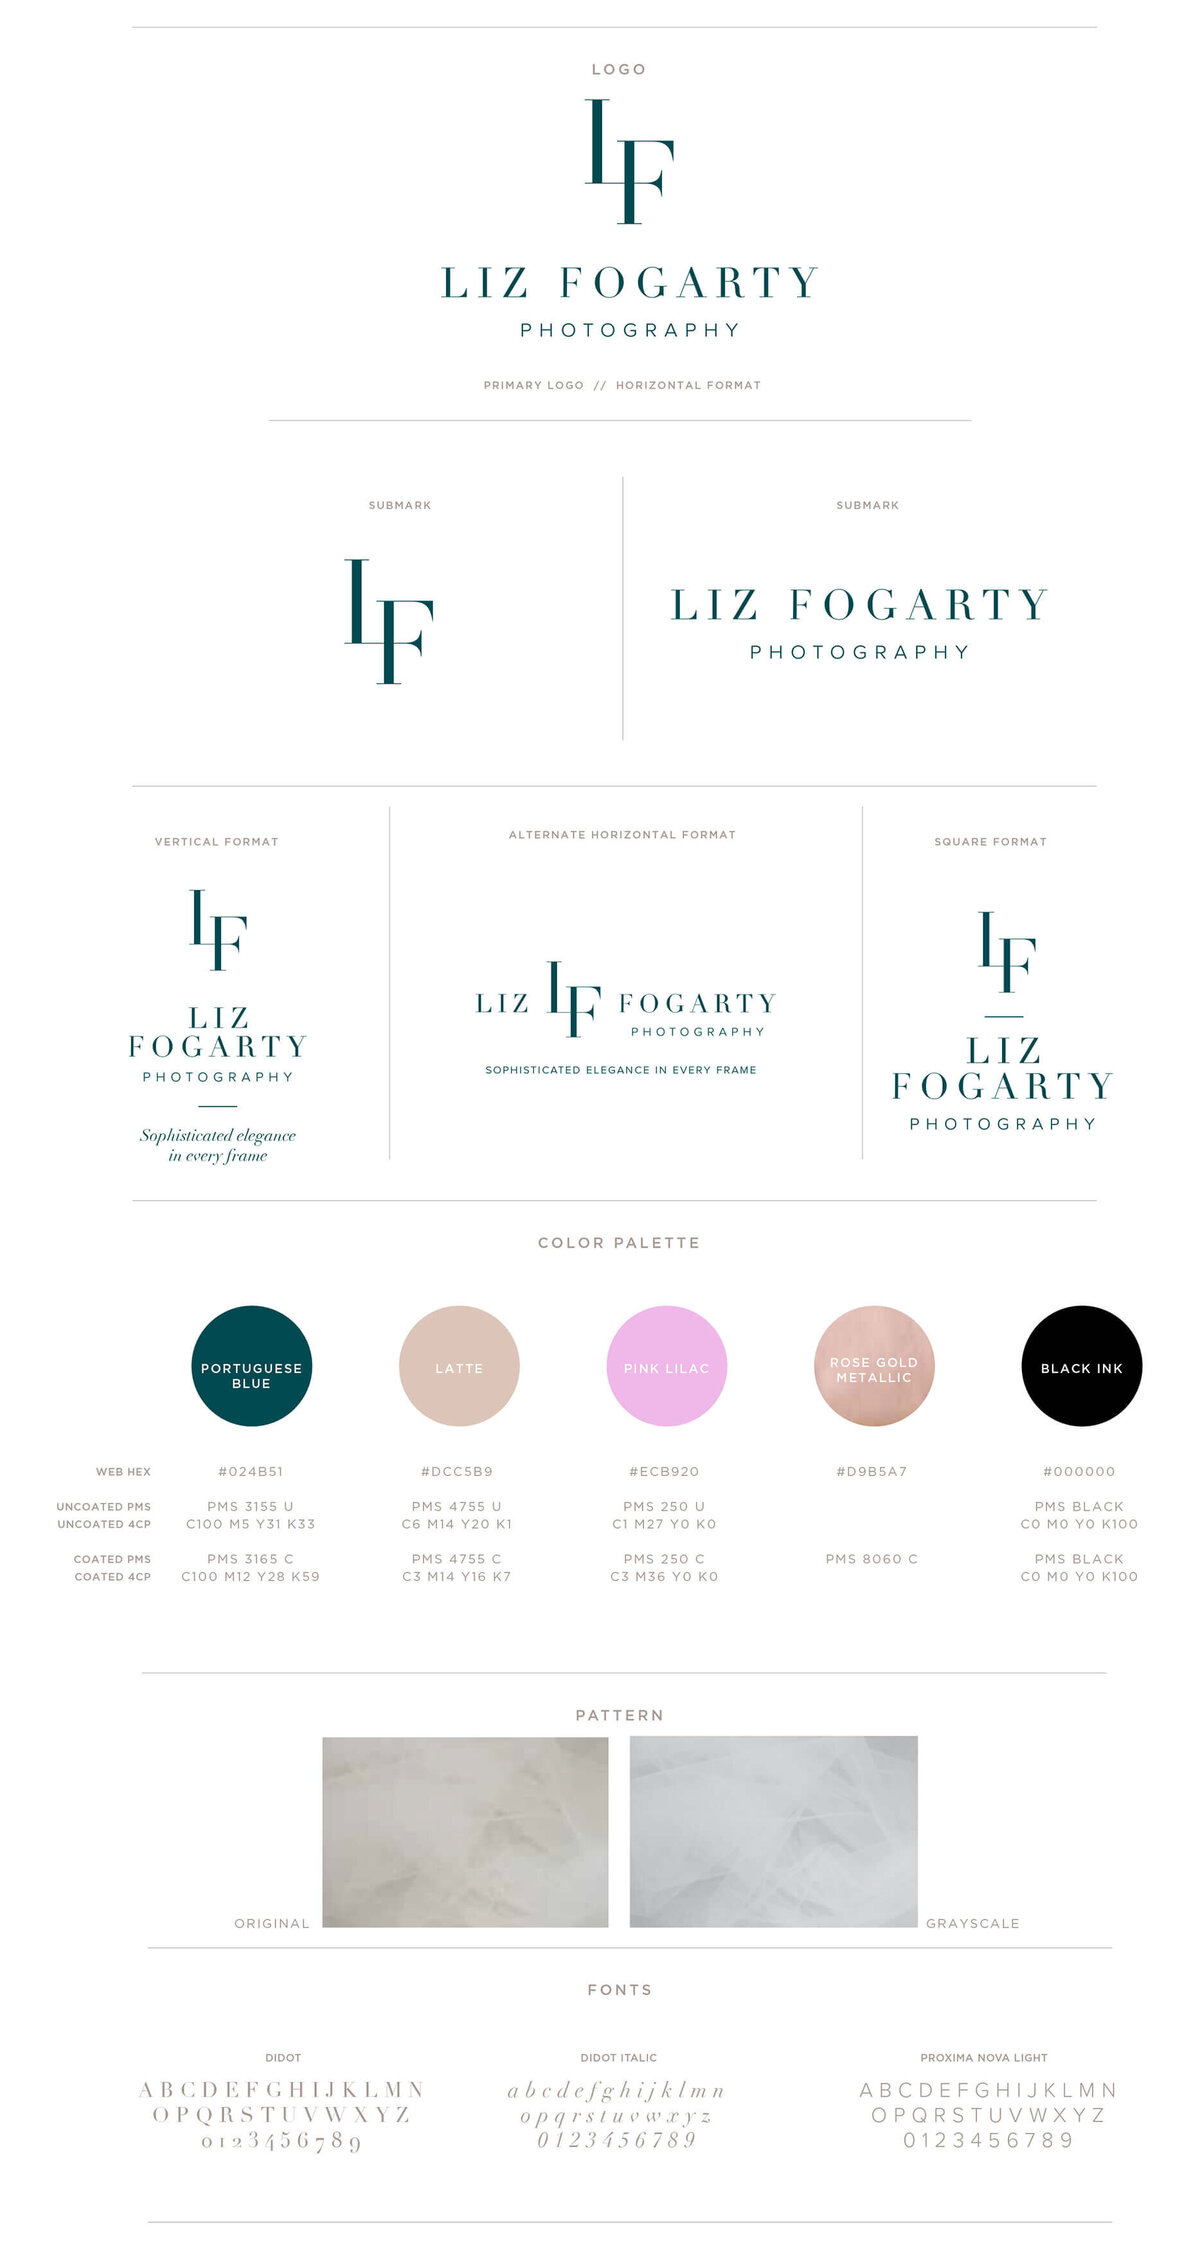 Classic-Modern-branding-design-for-Liz-Fogarty-Photography-by-Fig-2-Design